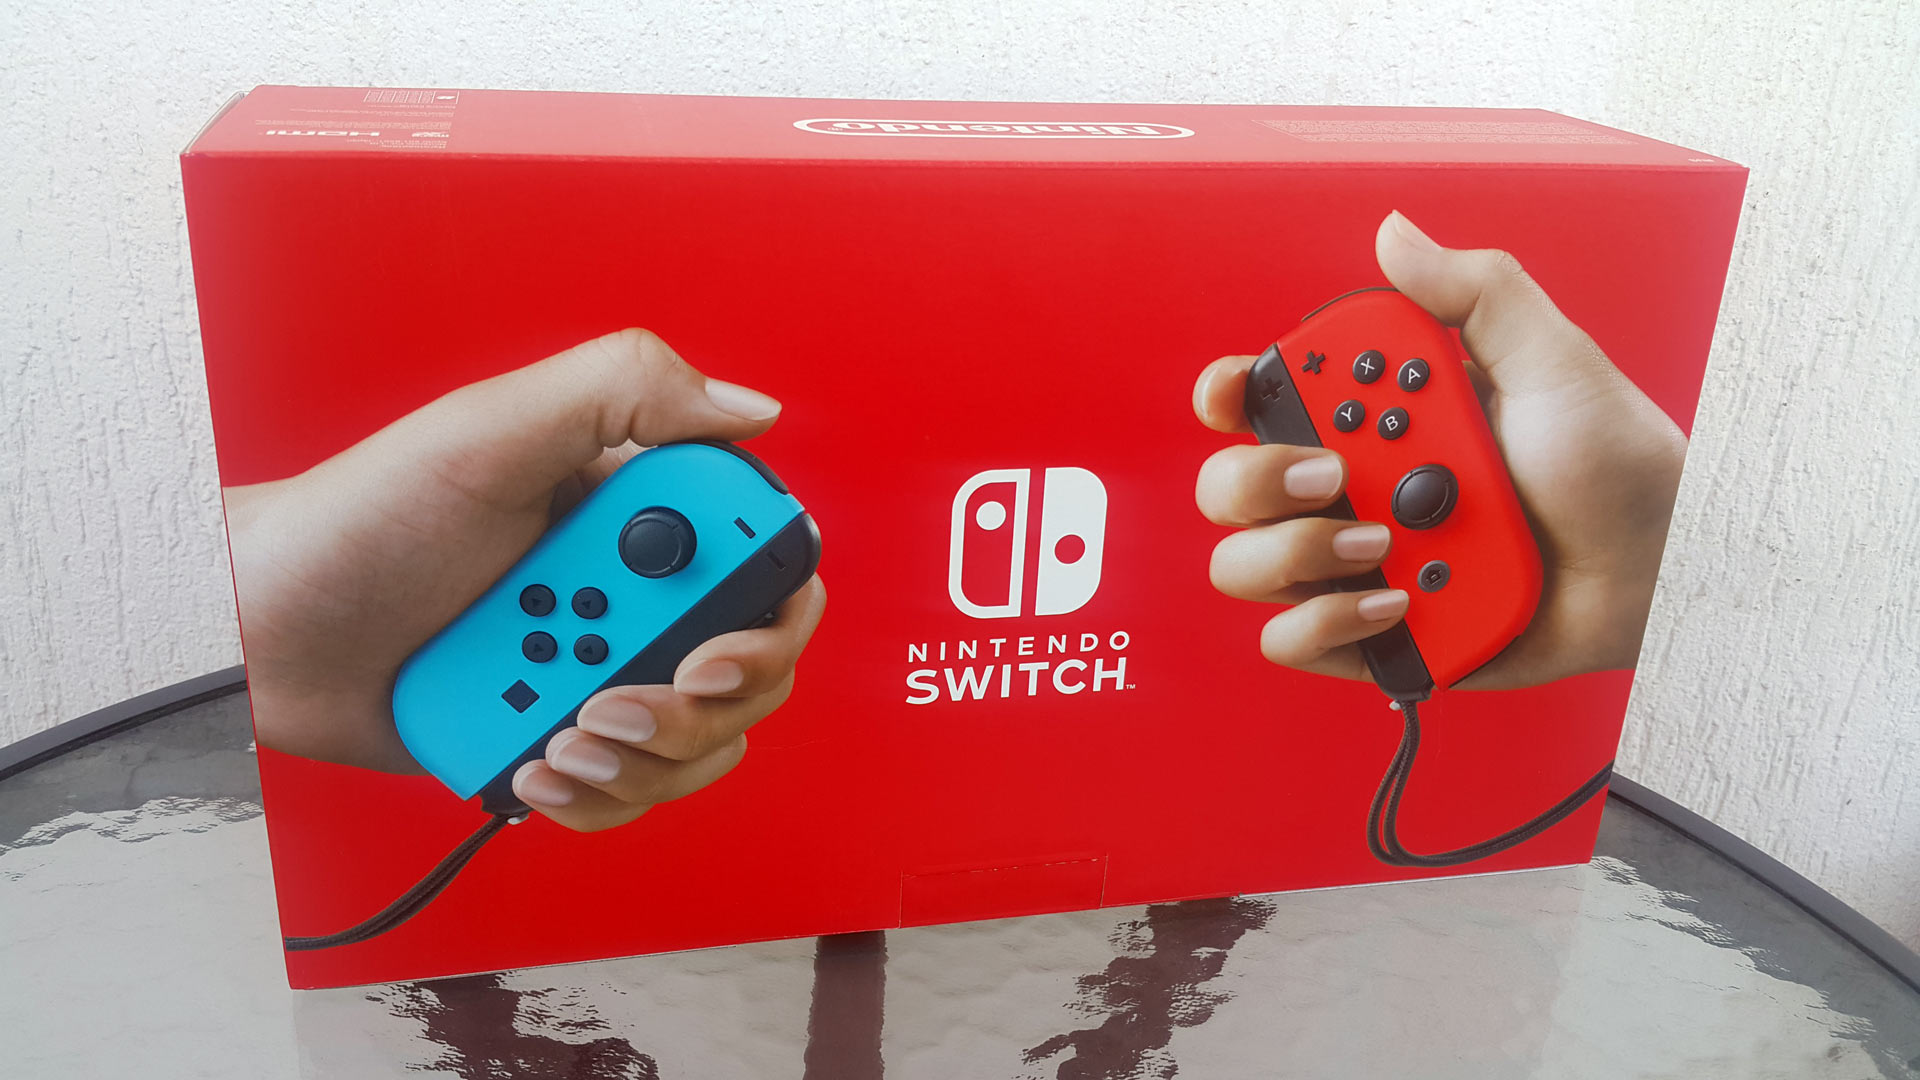 Nintendo switch old. Нинтендо свитч 2. Коробка Нинтендо свитч 2. Коробка от Nintendo Switch. Nintendo Switch 1.